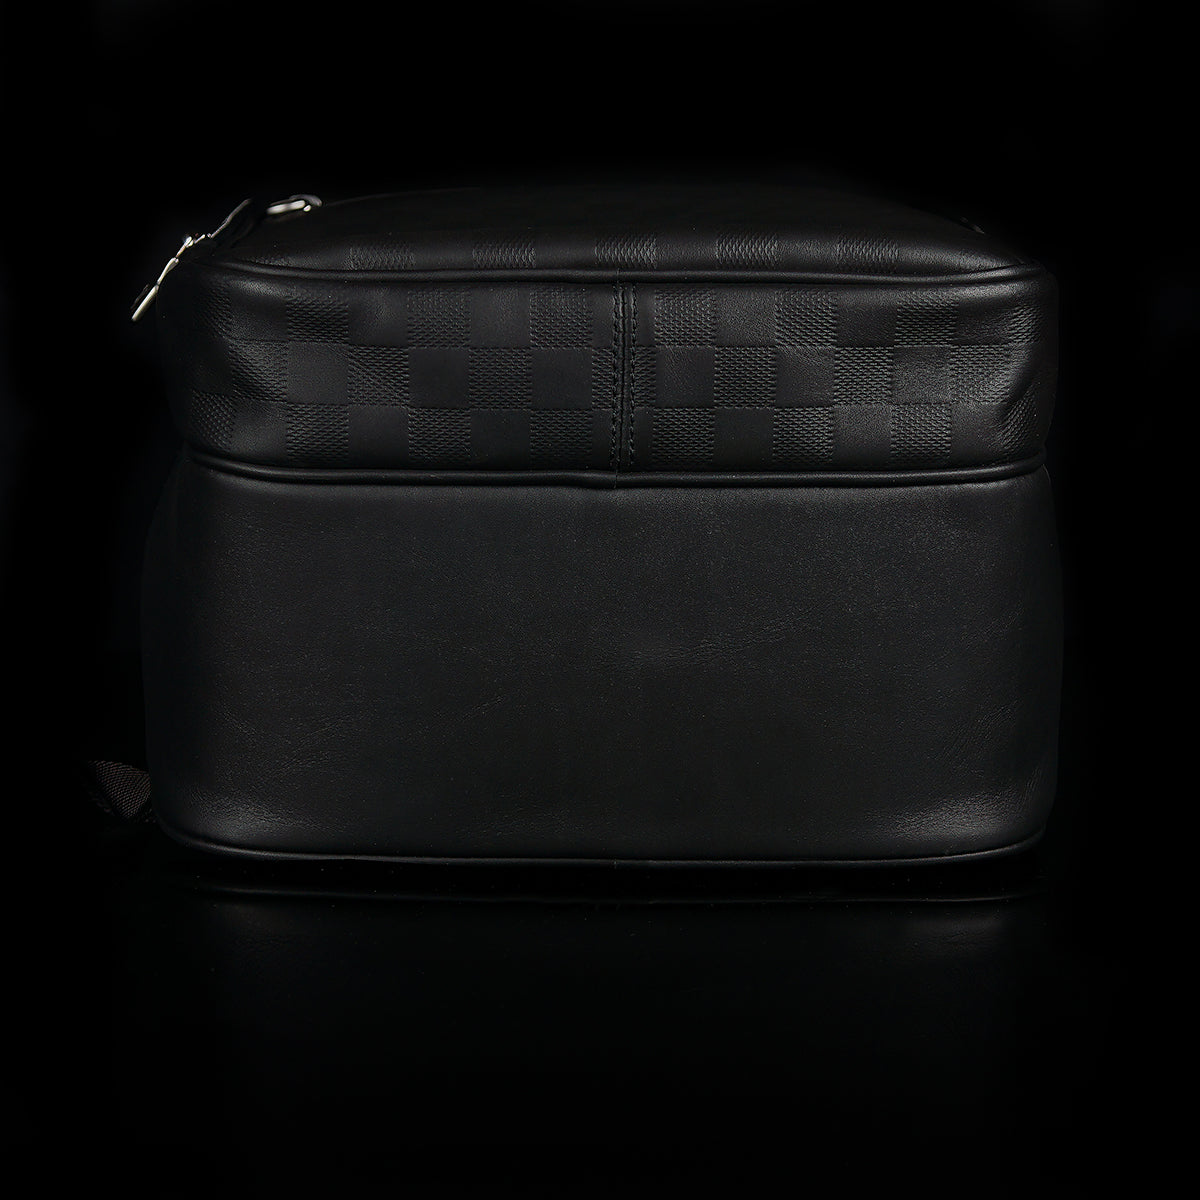 Louis Vuitton DAMIER INFINI Michael backpack nv2 (N45287)